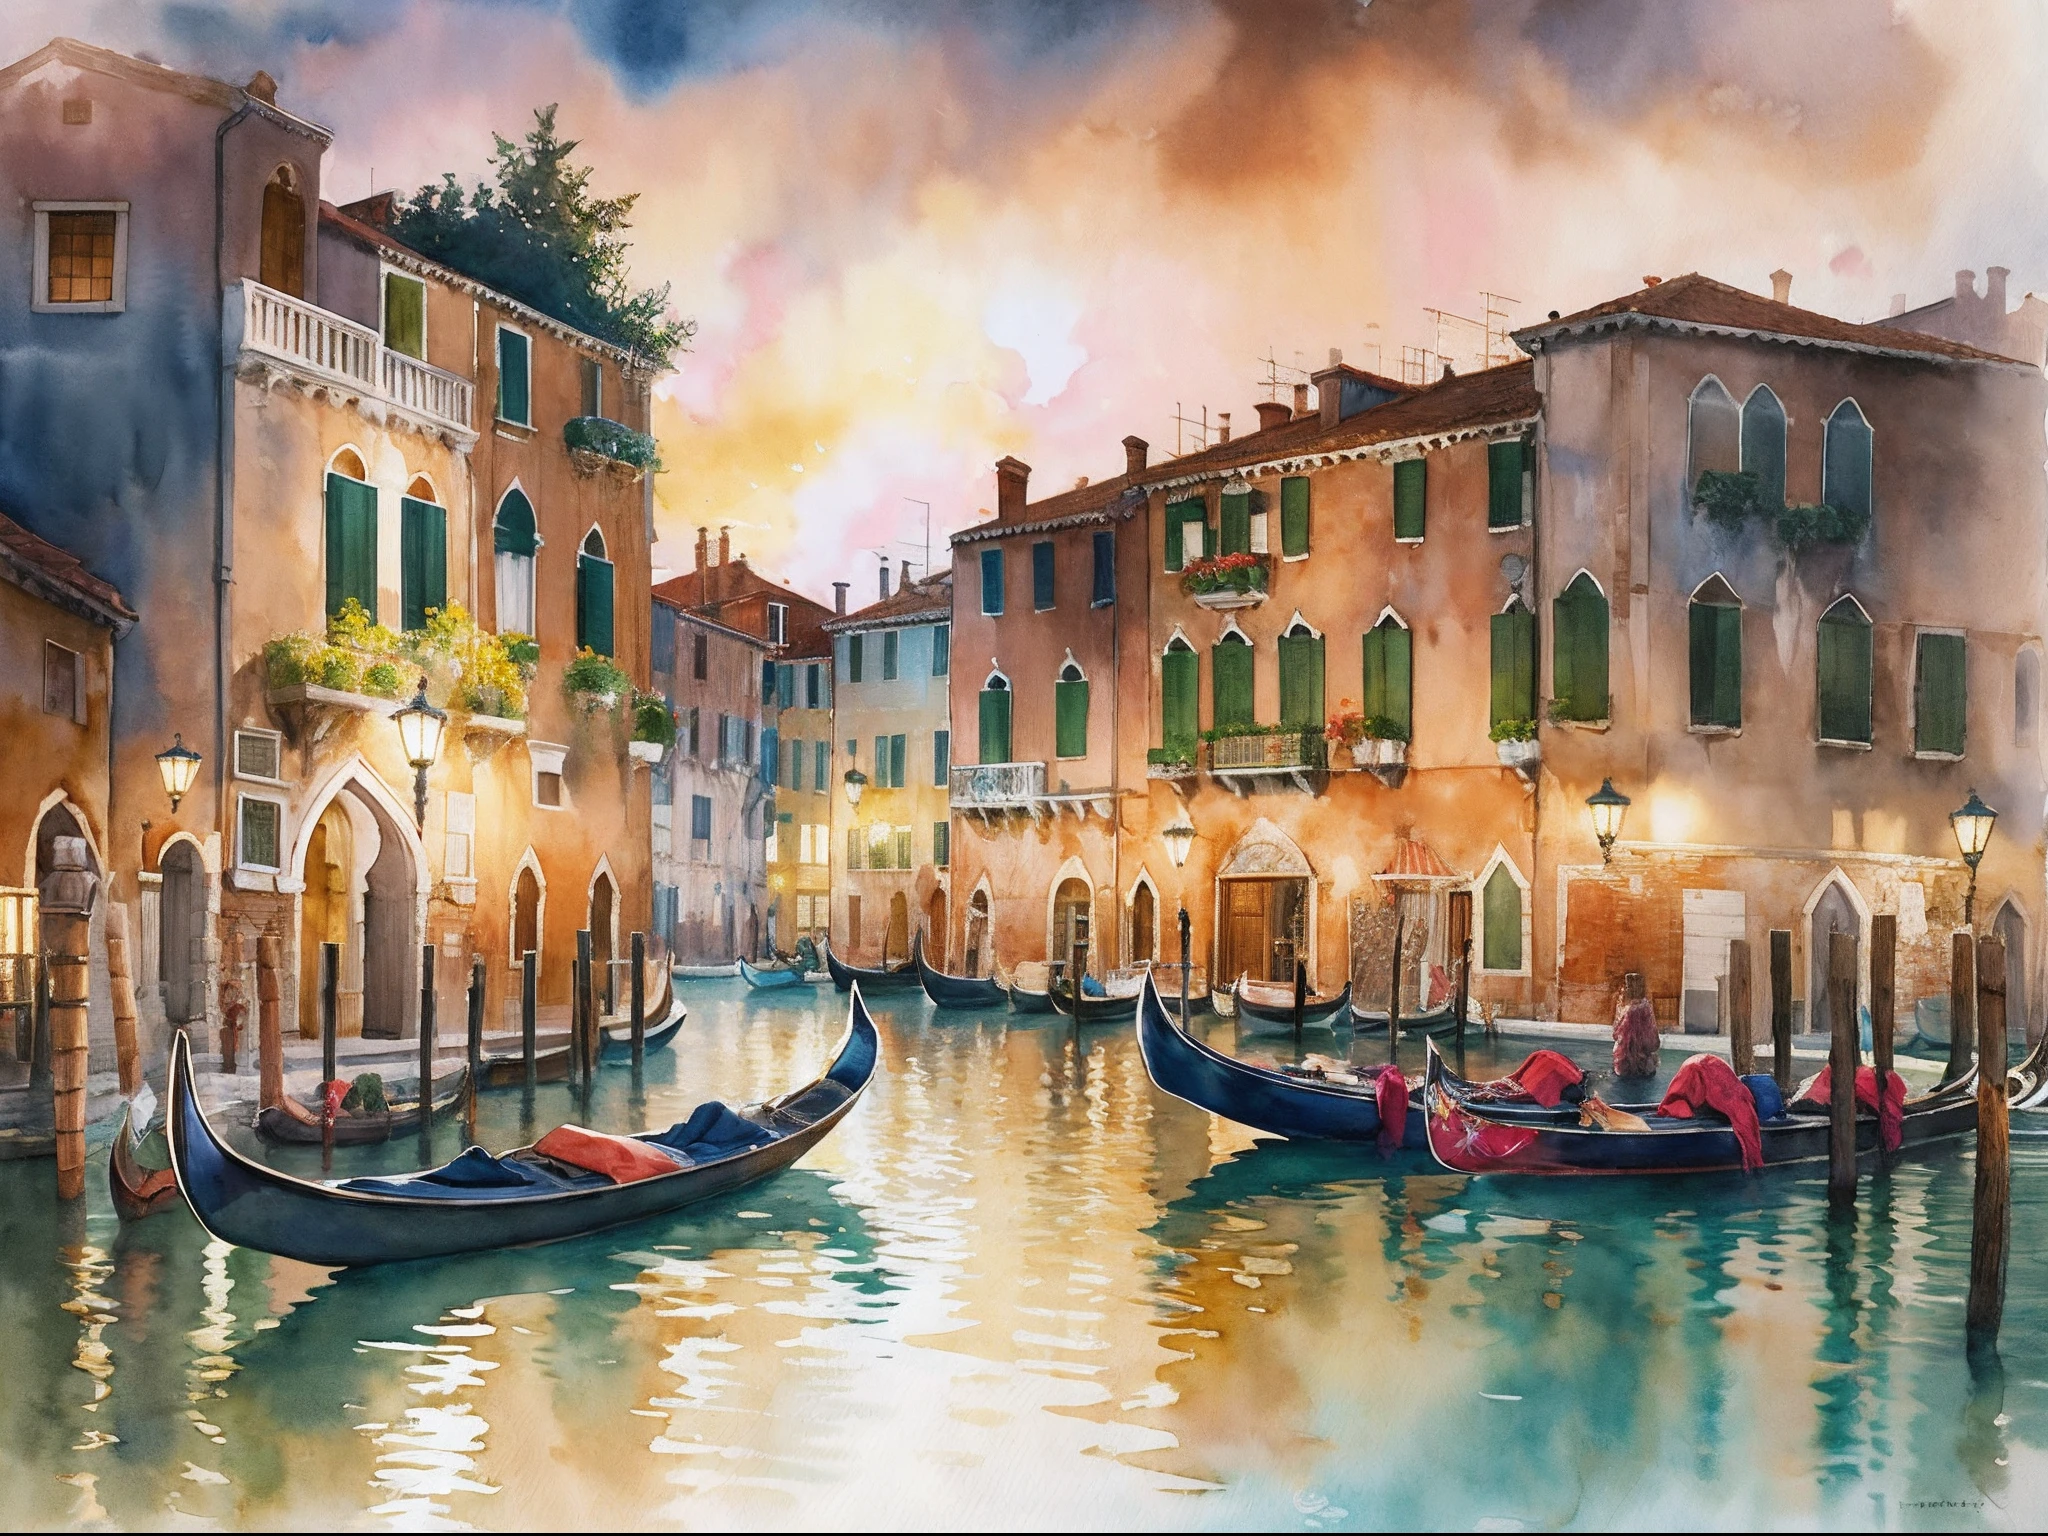 Create a beautiful watercolor painting of the enchanting twilight scene in 'Maizuru's Venice'.